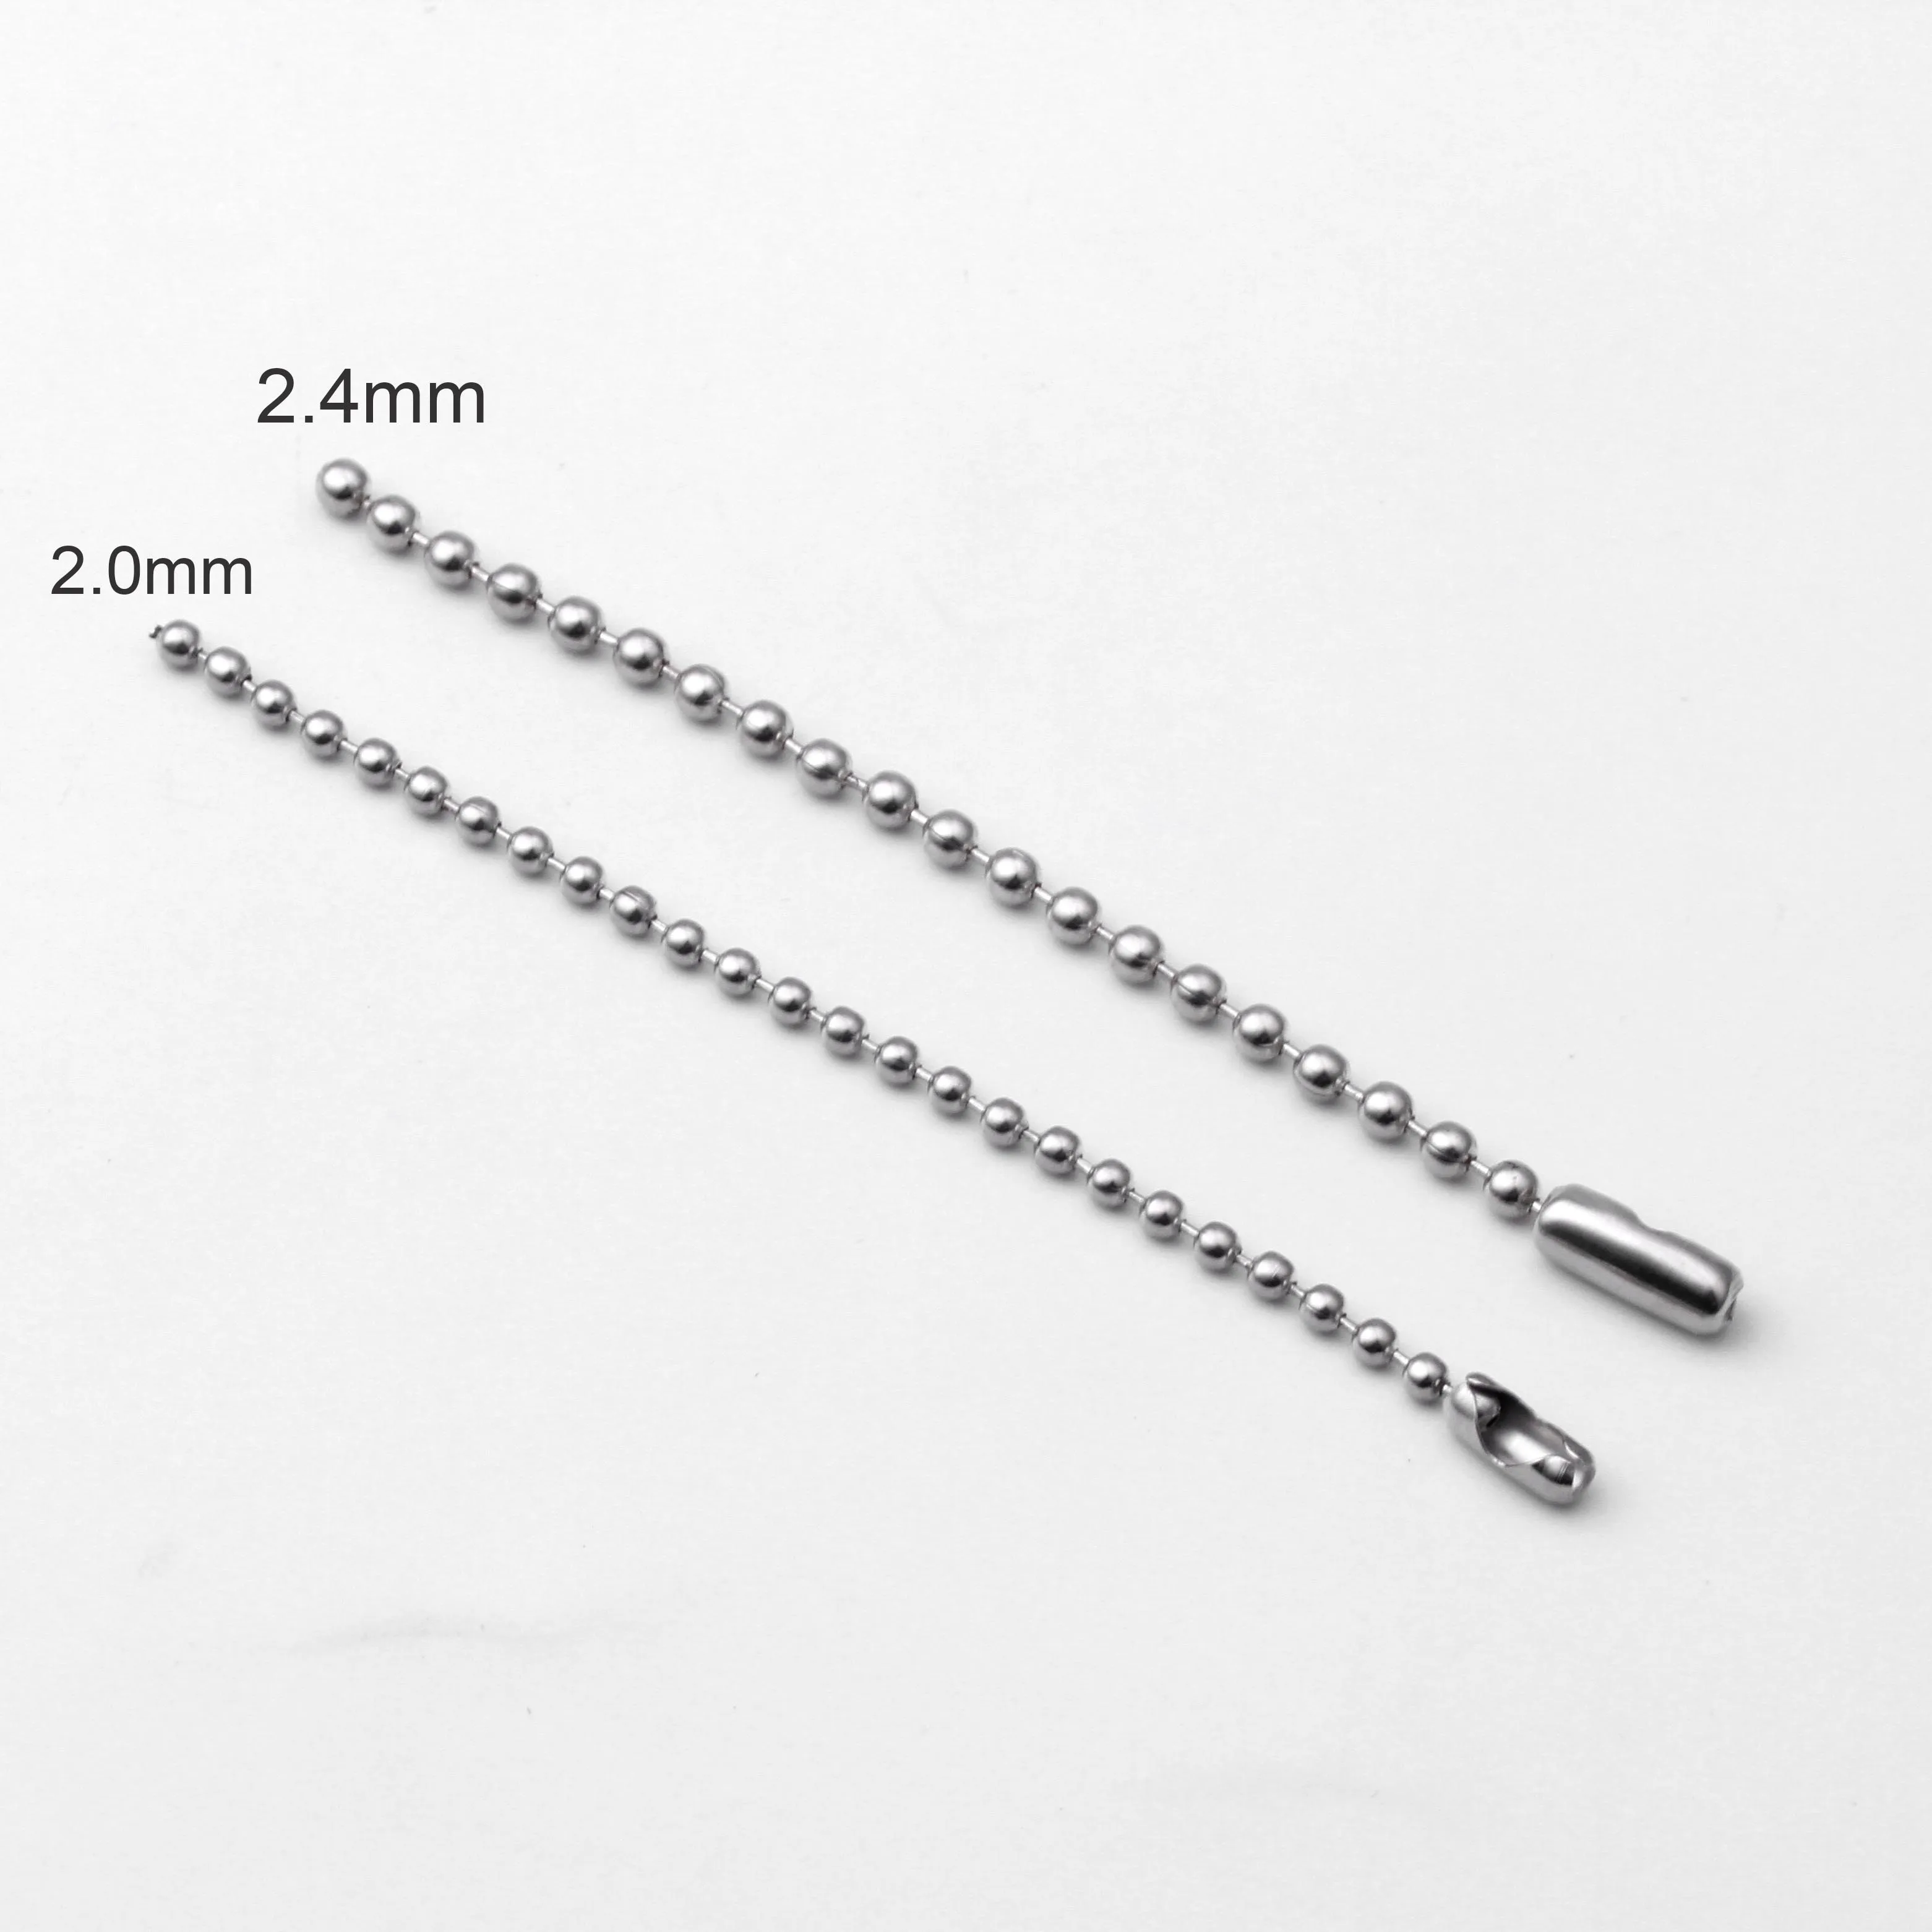 1 yard Stainless Steel Ball Chain, 2mm bead chain, silver chain, fch11